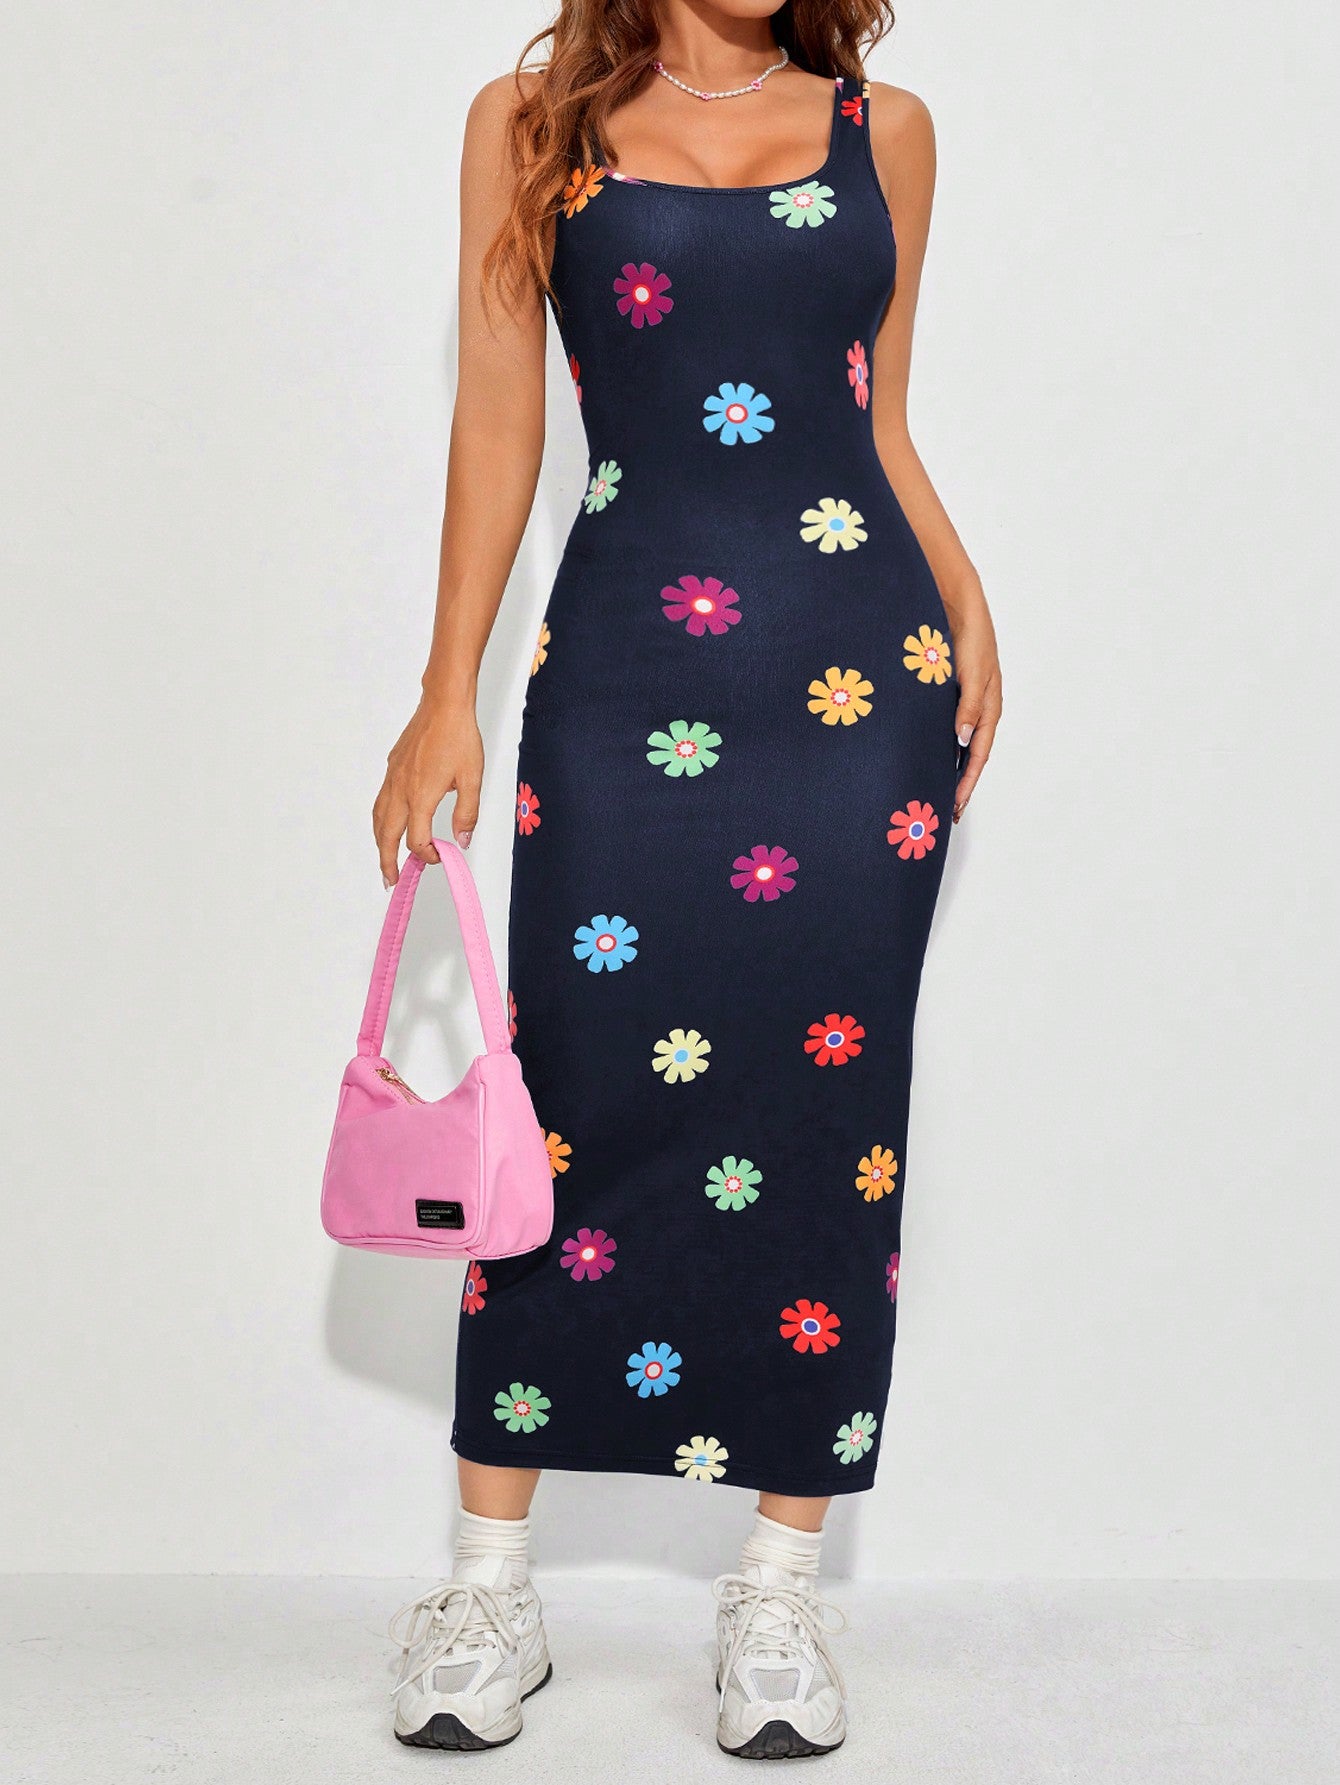 Women's Summer Vacation Style Flower Print Spaghetti Strap Dress